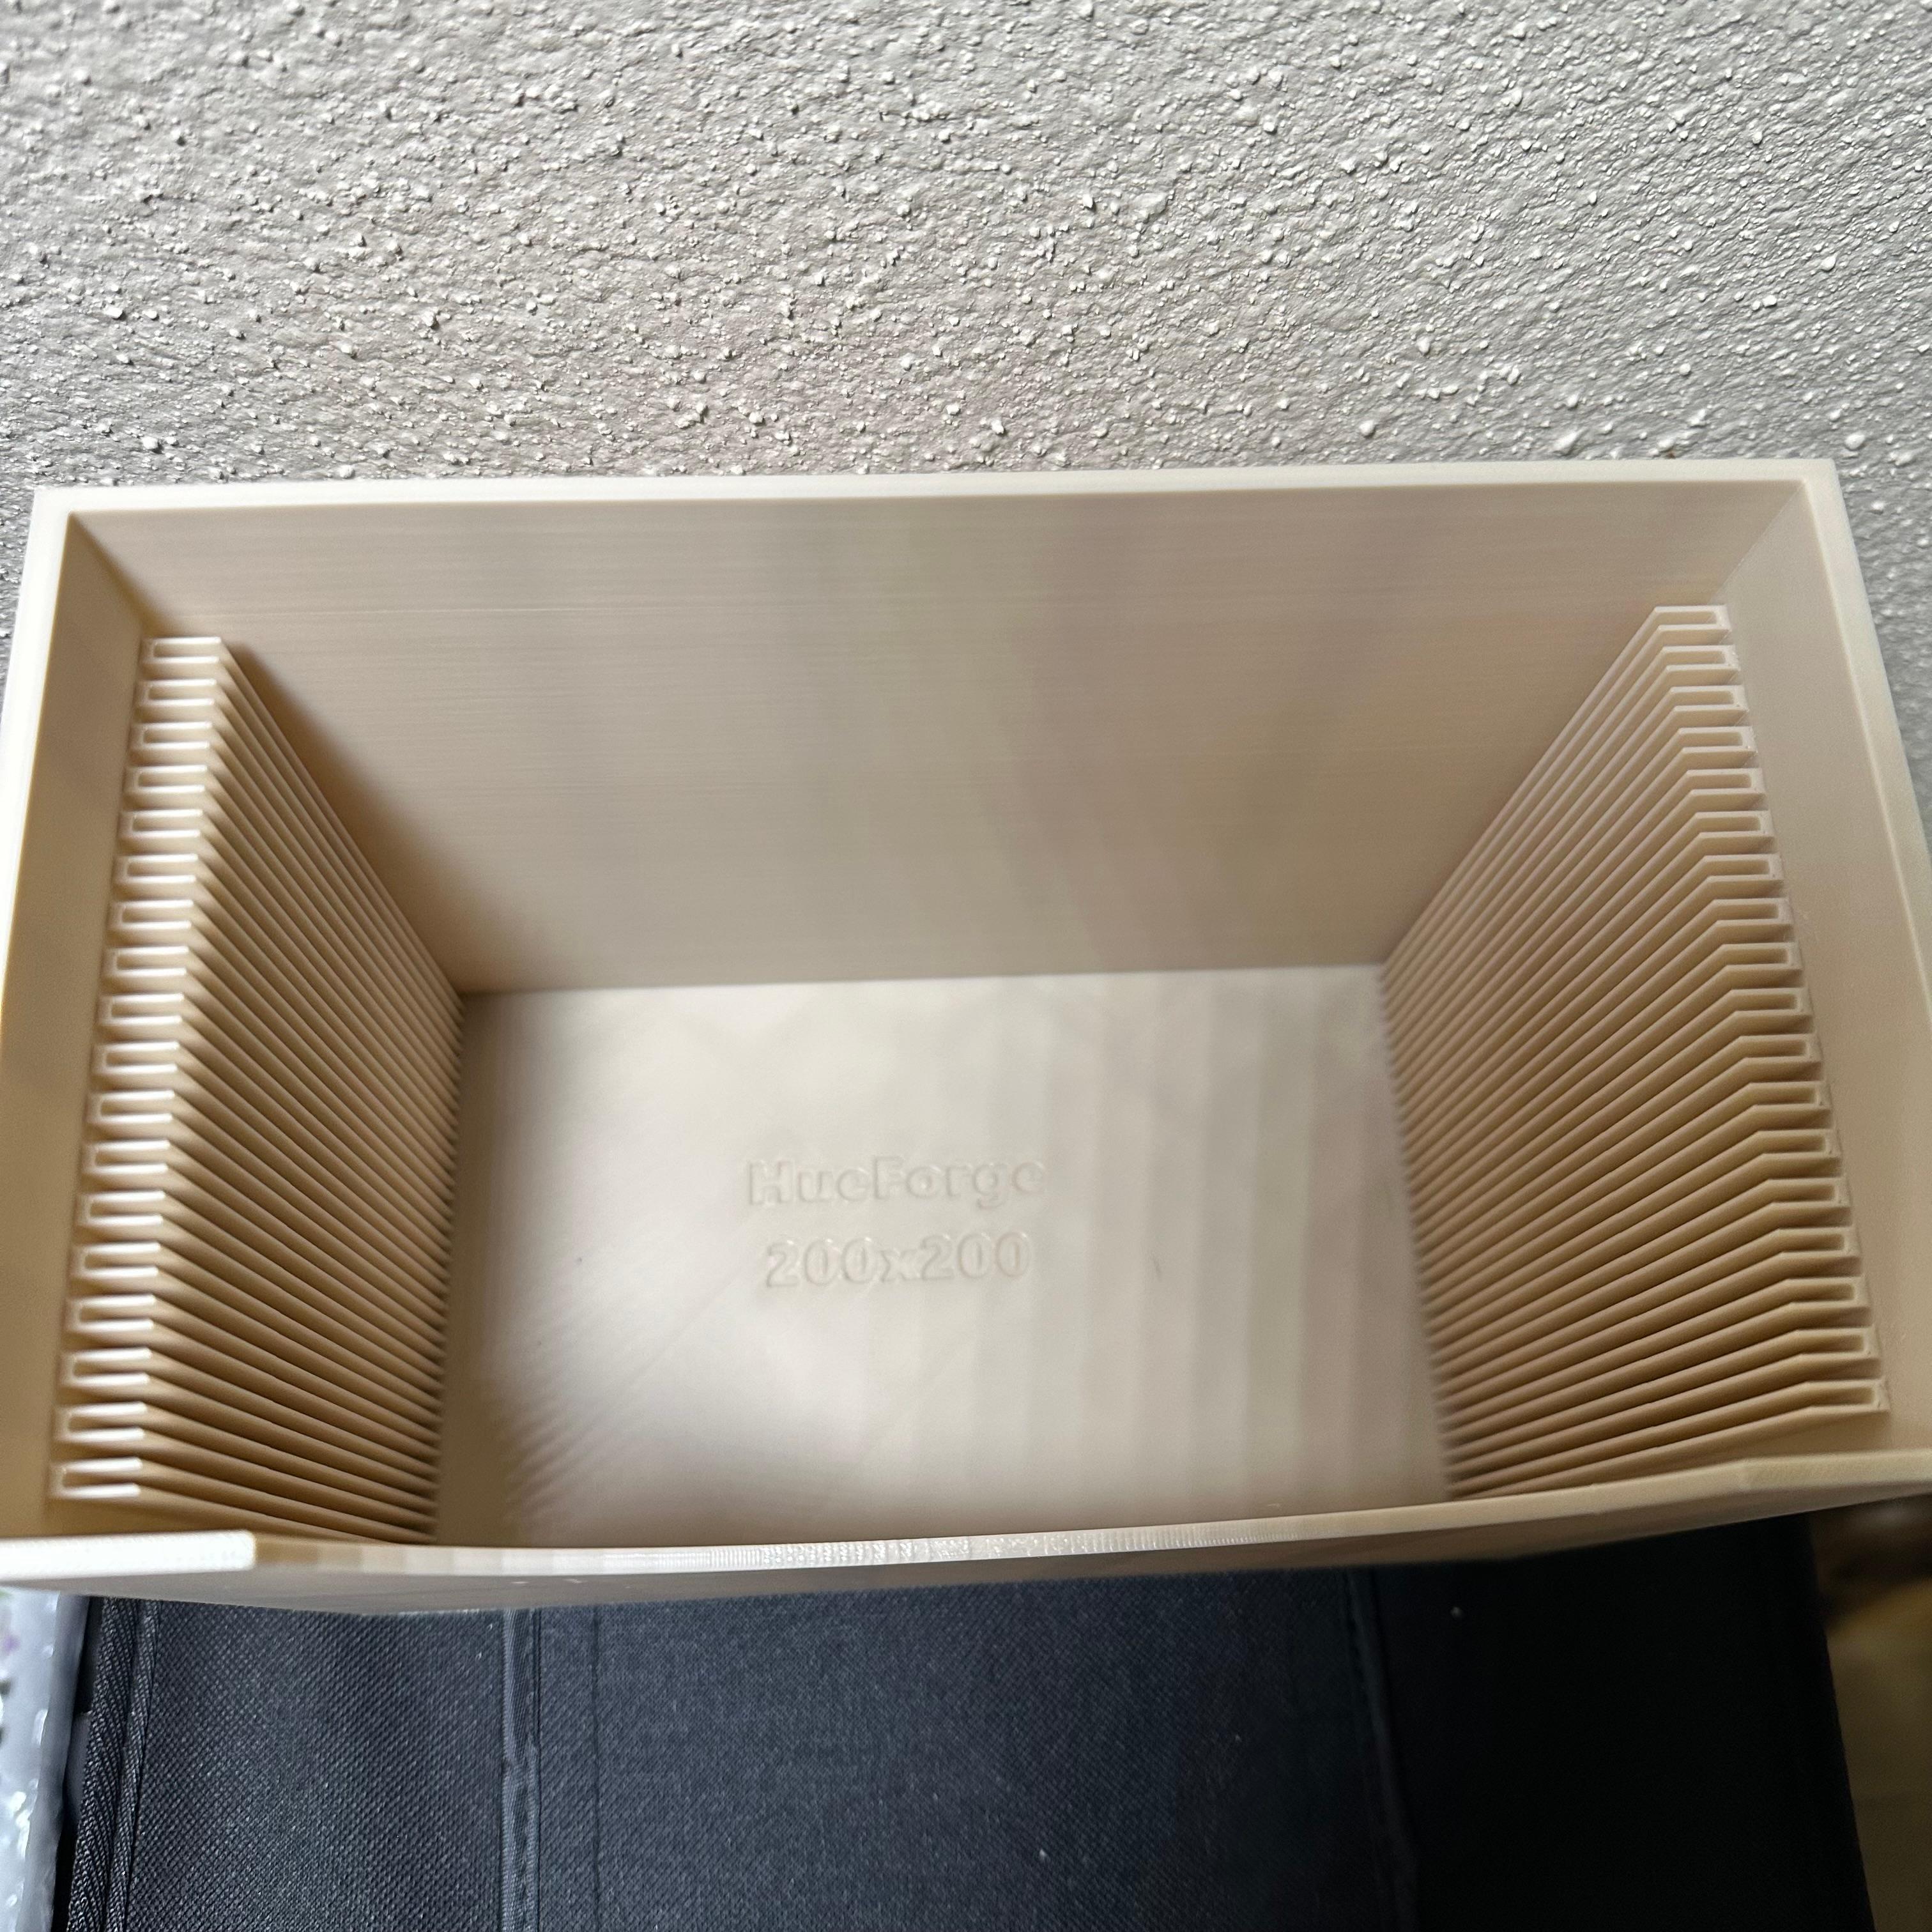 HueForge Storage Box 3d model